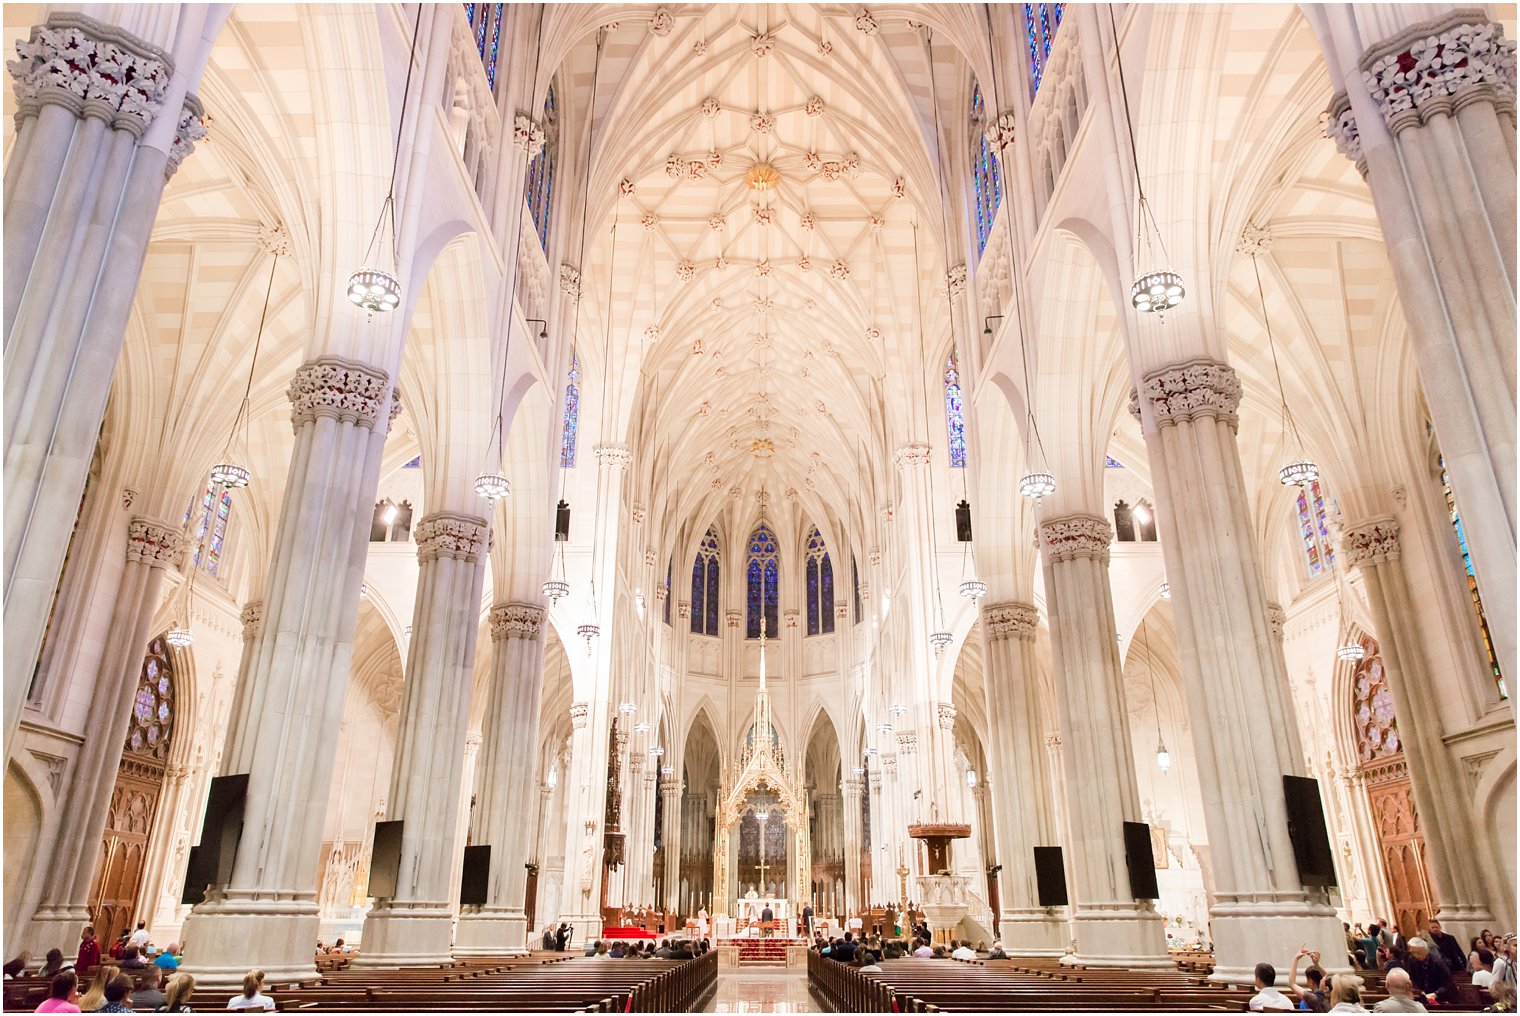 St. Patrick's Cathedral Interior Photo | Photo by Idalia Photography